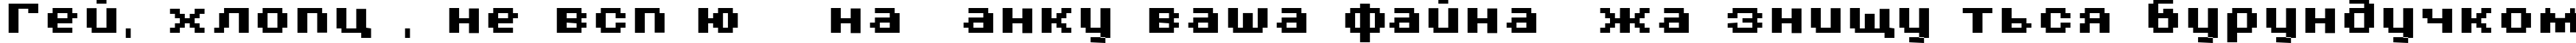 Пример написания шрифтом AuX DotBitC Xtra Bold текста на украинском